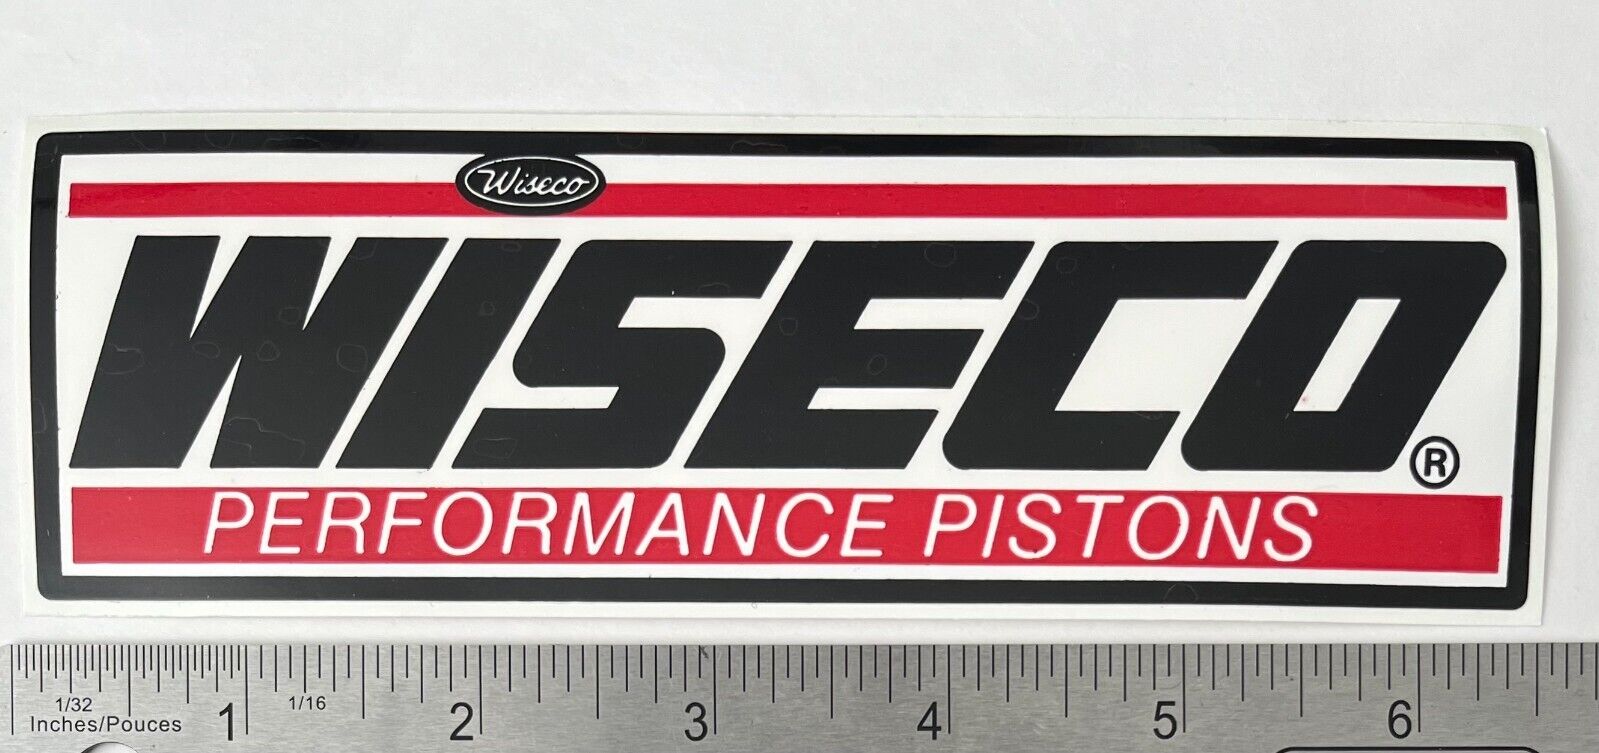 Wiseco Performance Pistons - Vintage Automotive Racing Sticker 6-3/8\